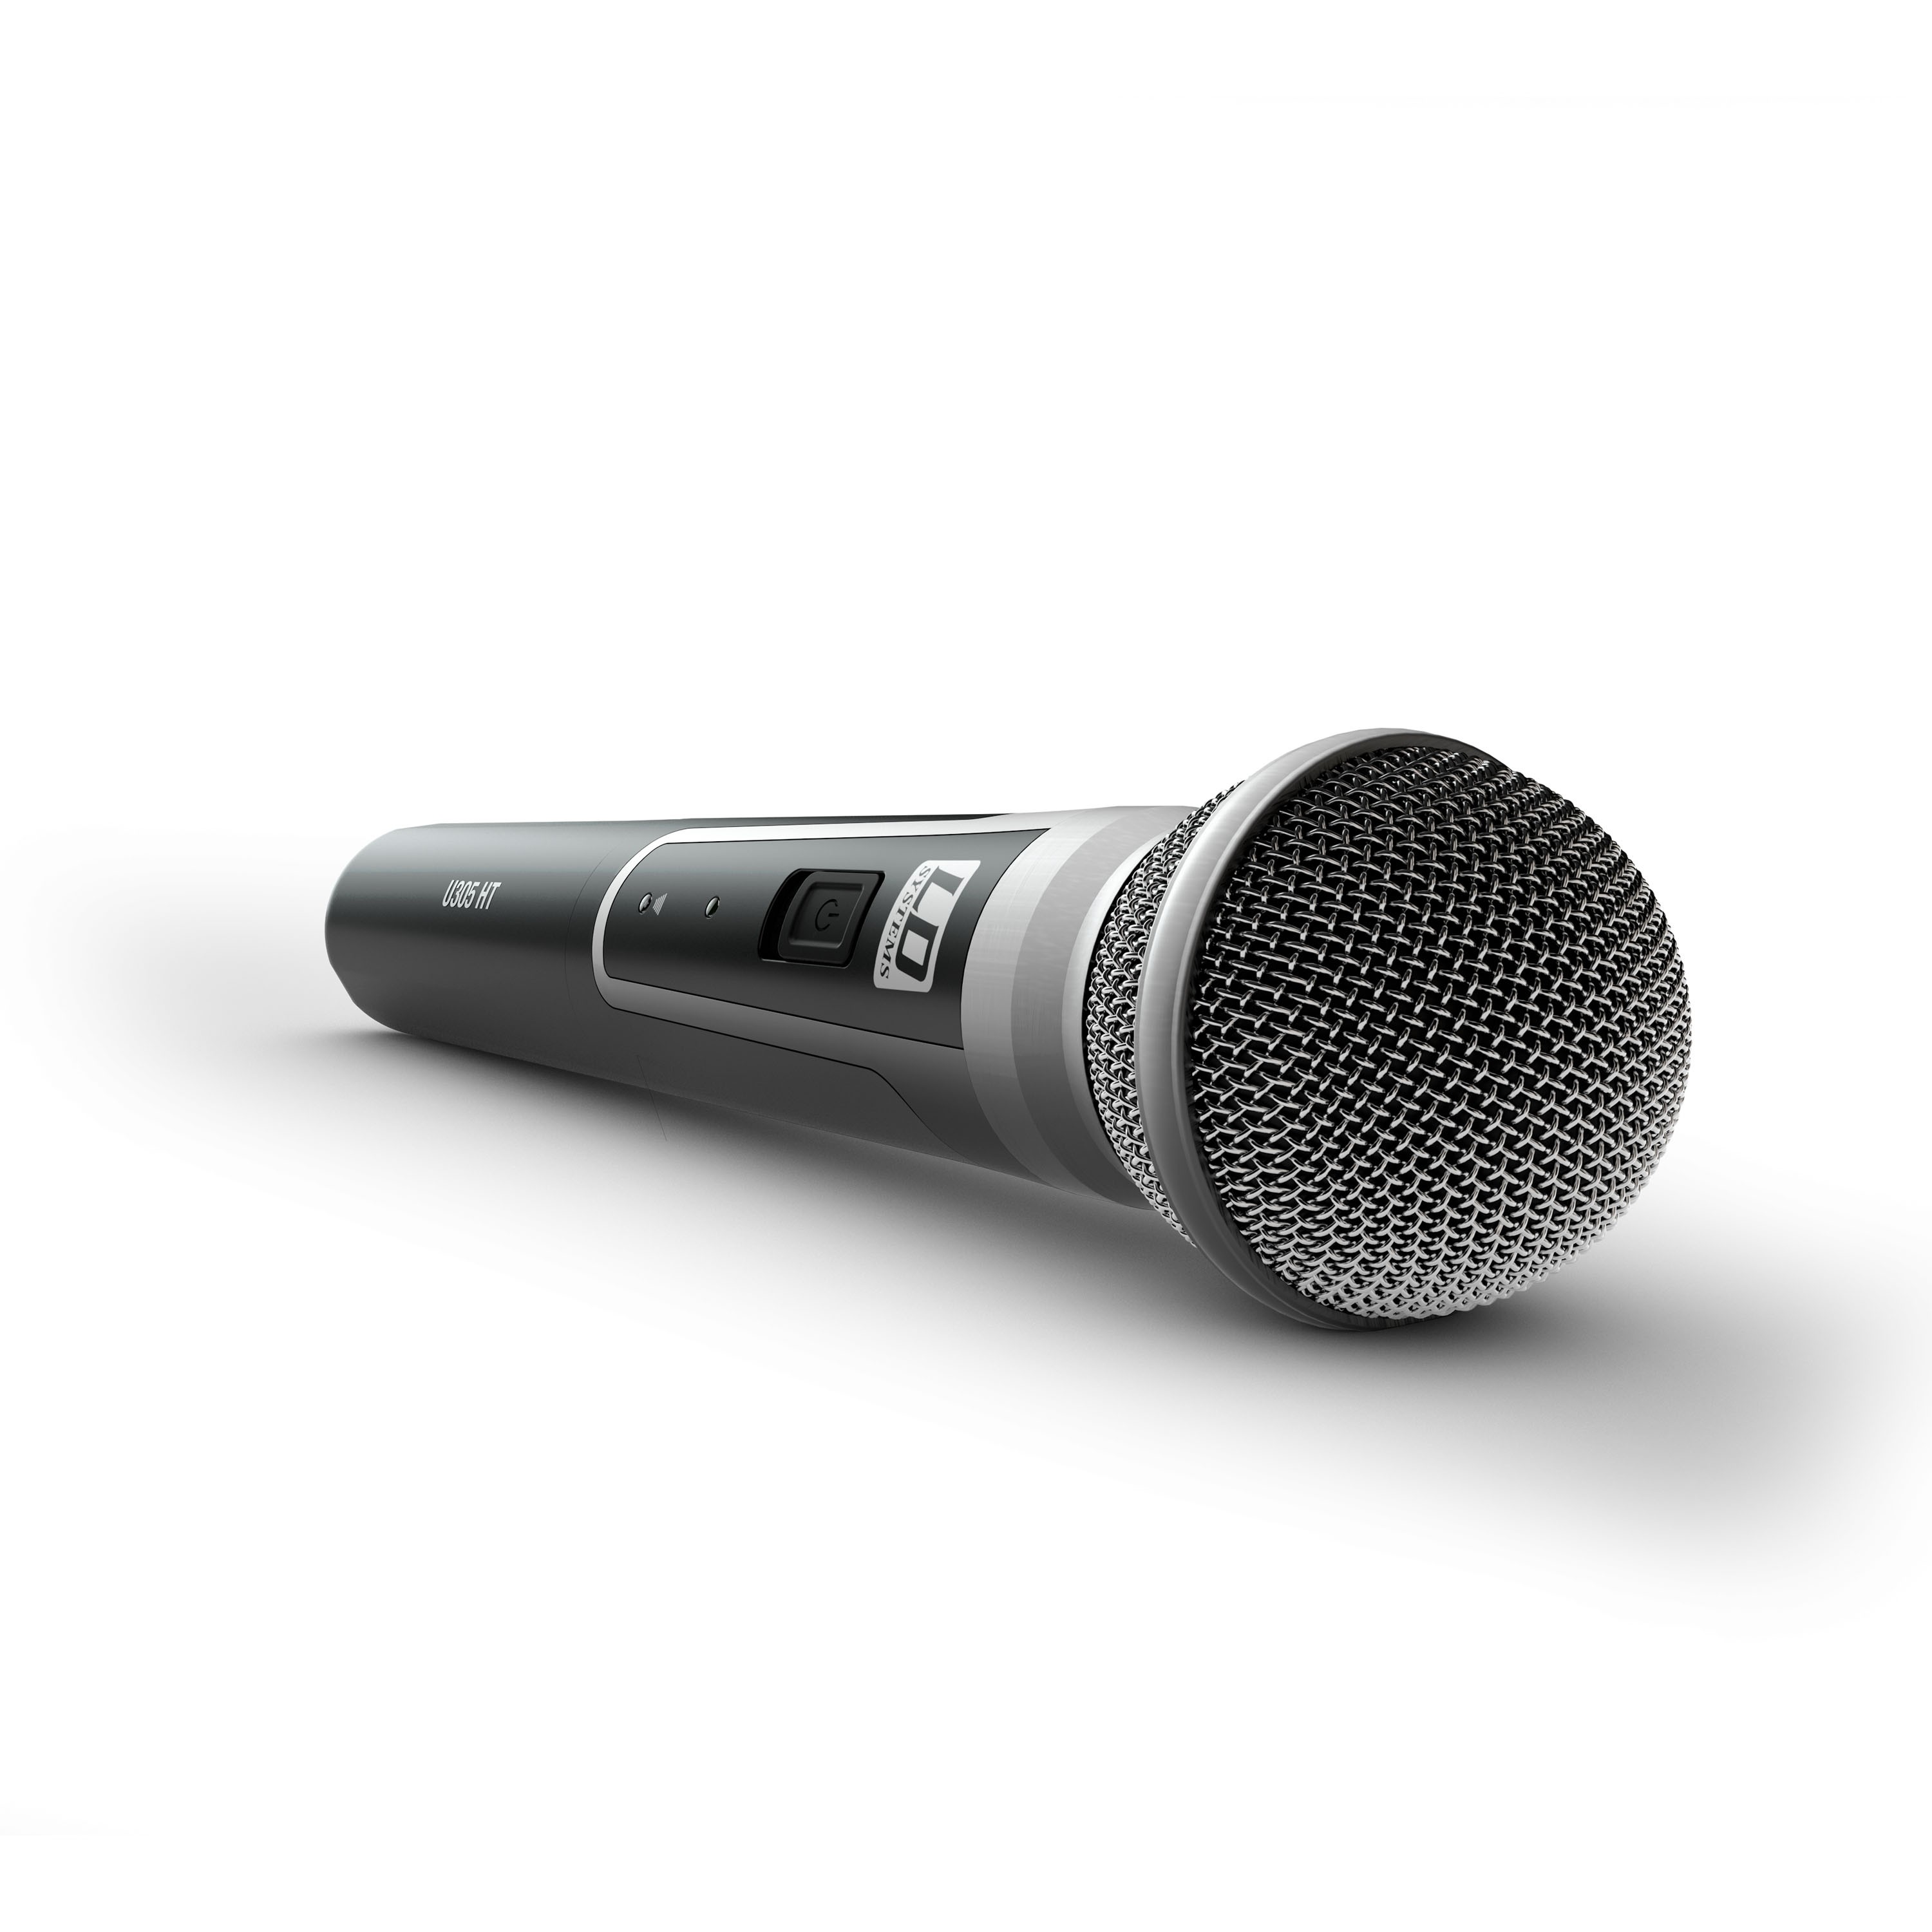 Ld Systems U305 Hhd - Wireless handheld microphone - Variation 3